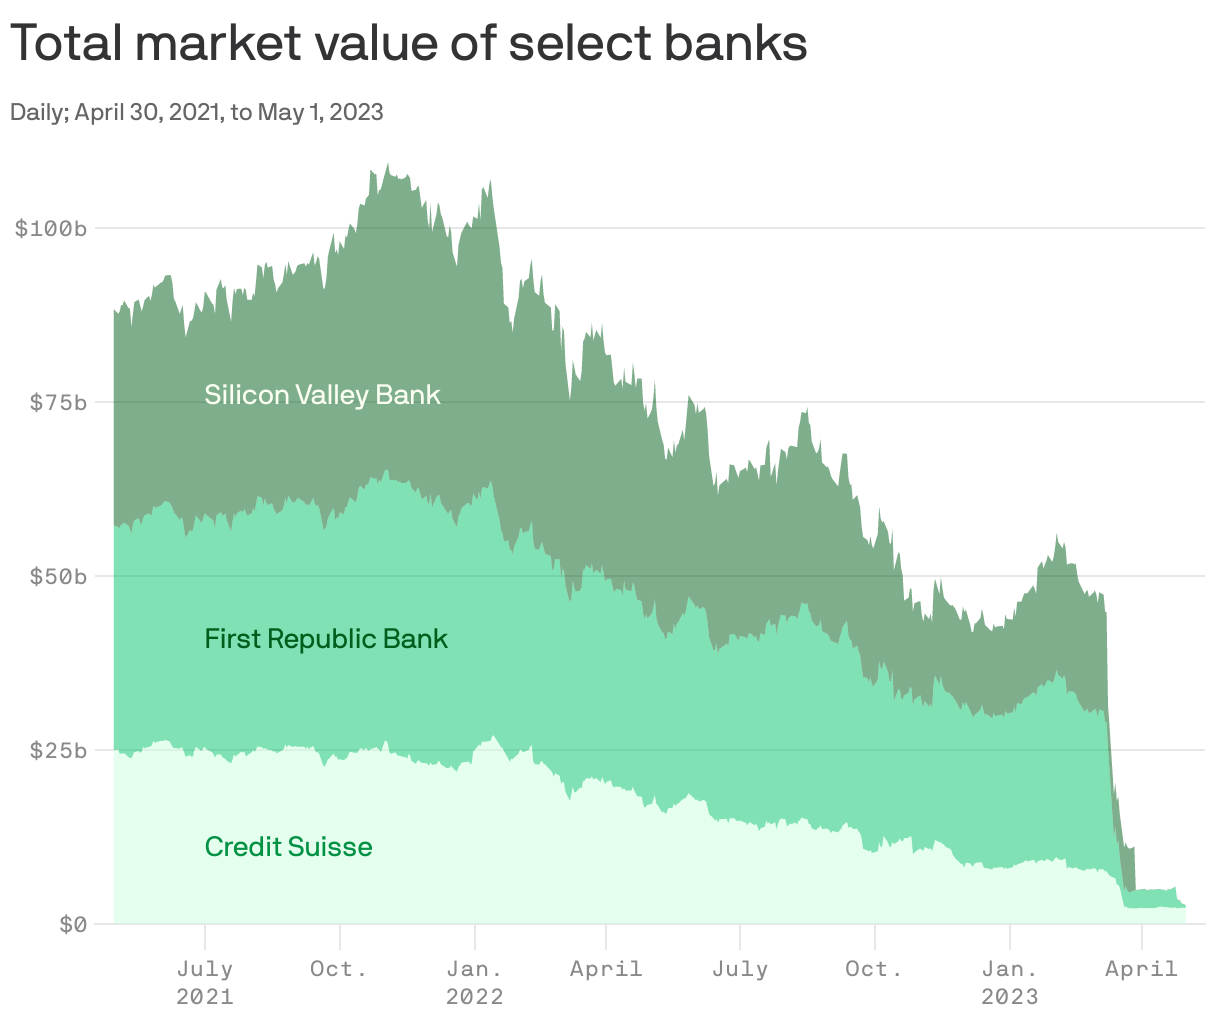 Total market value of select banks